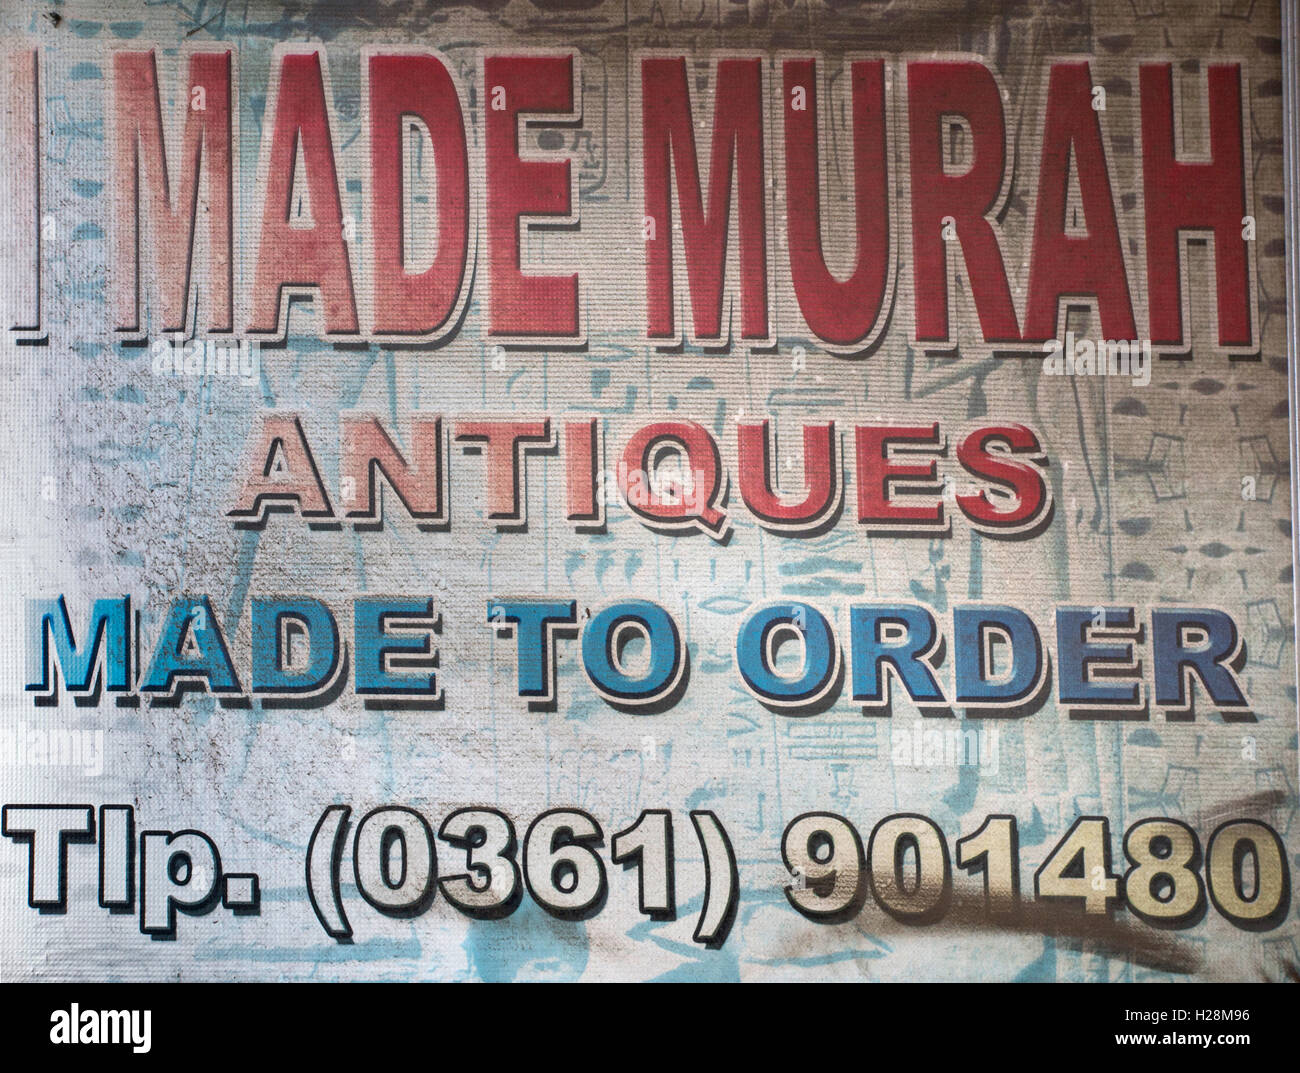 Indonesia, Bali, Ubud, Peliatan, Jl. Raya Andong, craft shop sign, ‘Antiques made to order’ Stock Photo